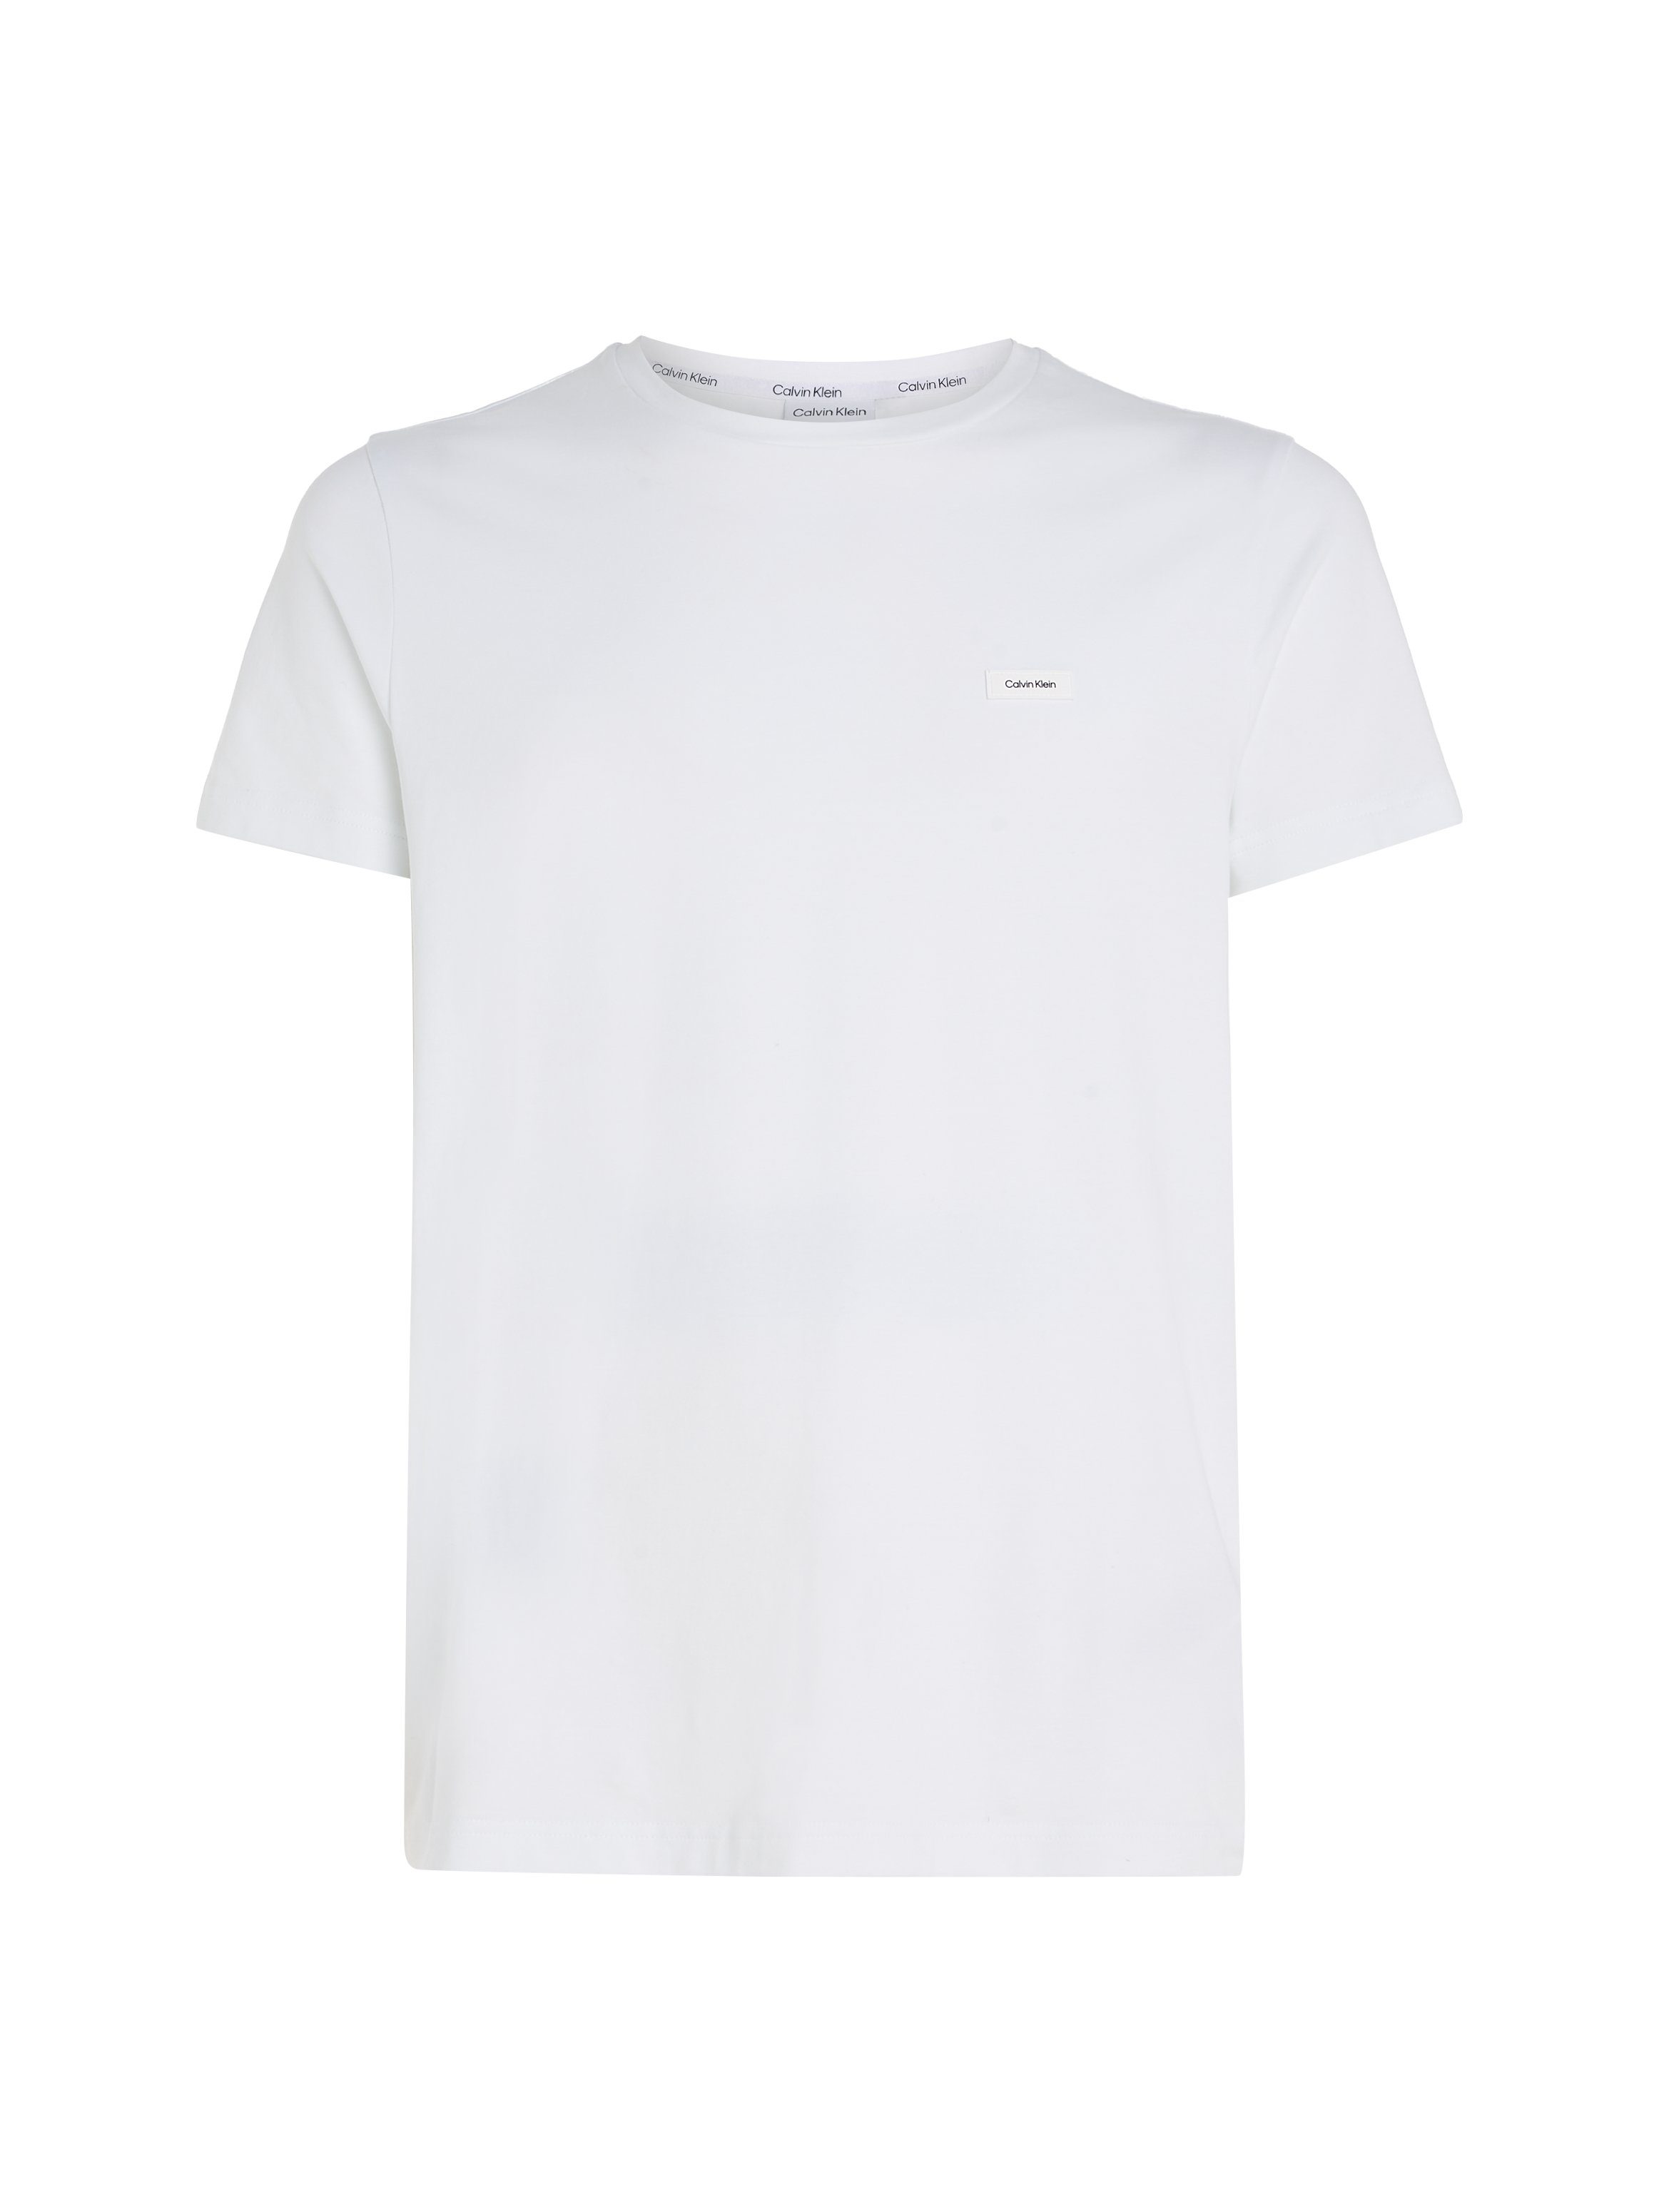 T-SHIRT White Klein SLIM Calvin FIT T-Shirt STRETCH Bright